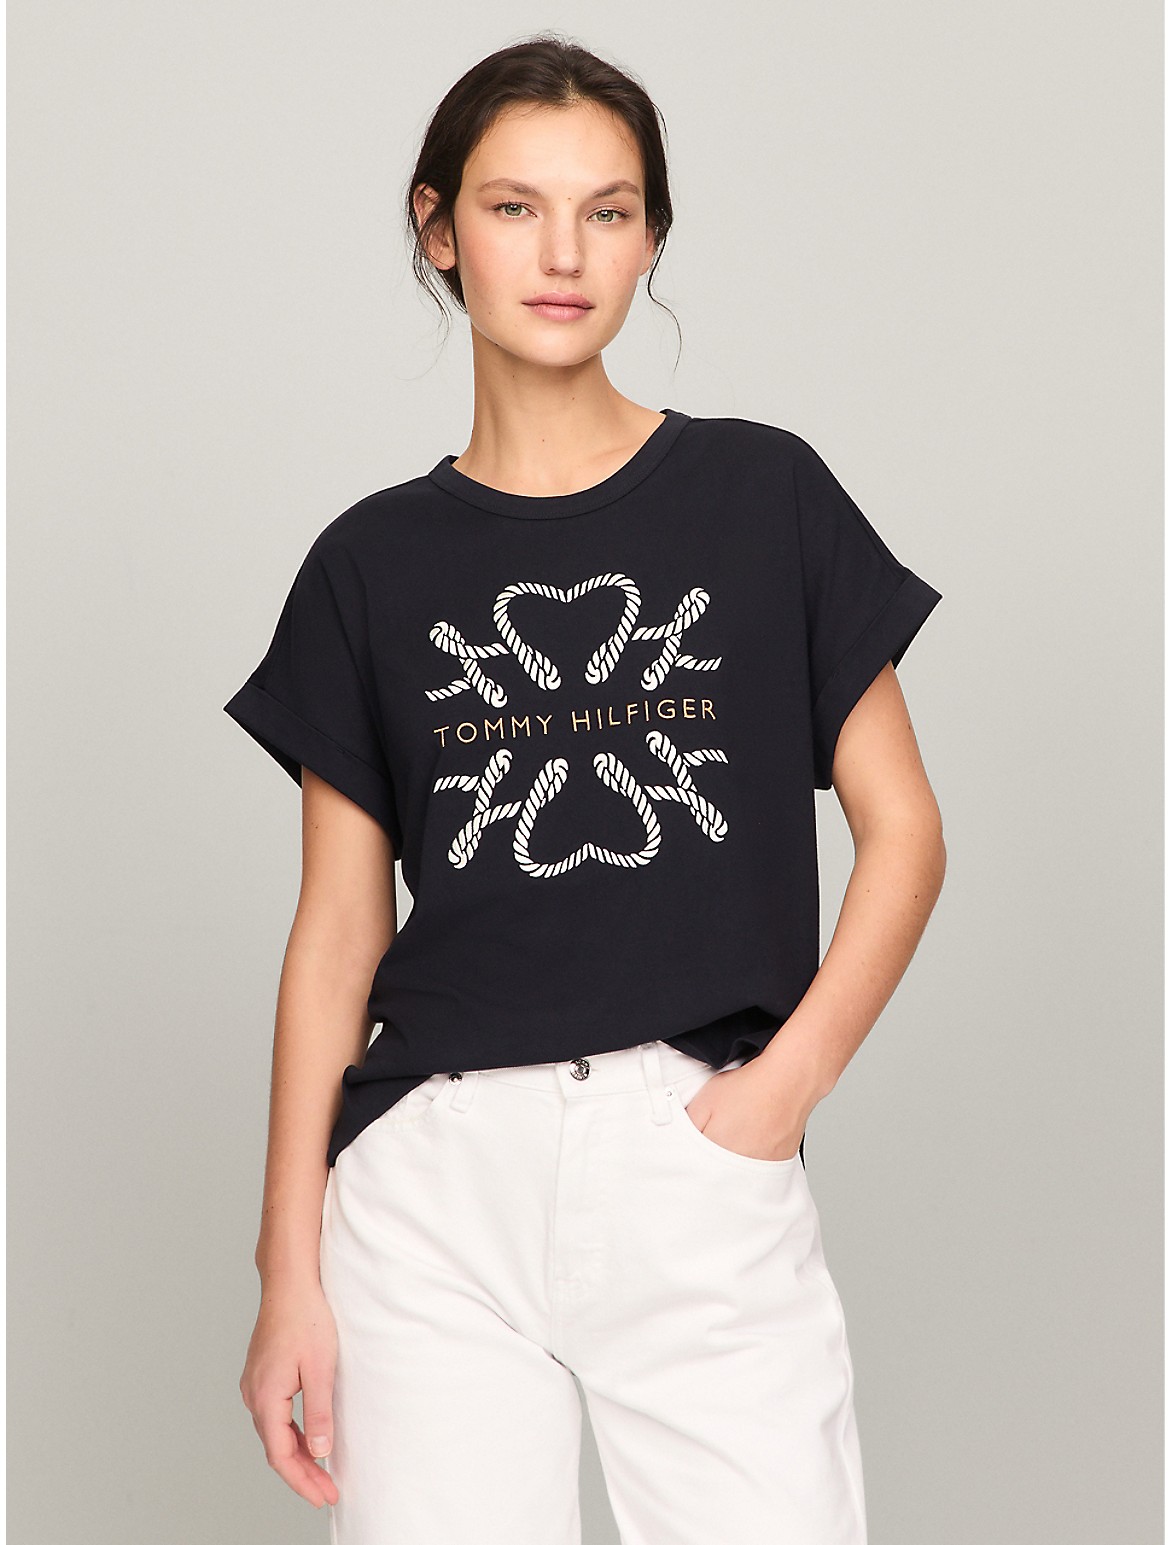 Tommy Hilfiger Women's Hilfiger Rope Logo T-Shirt